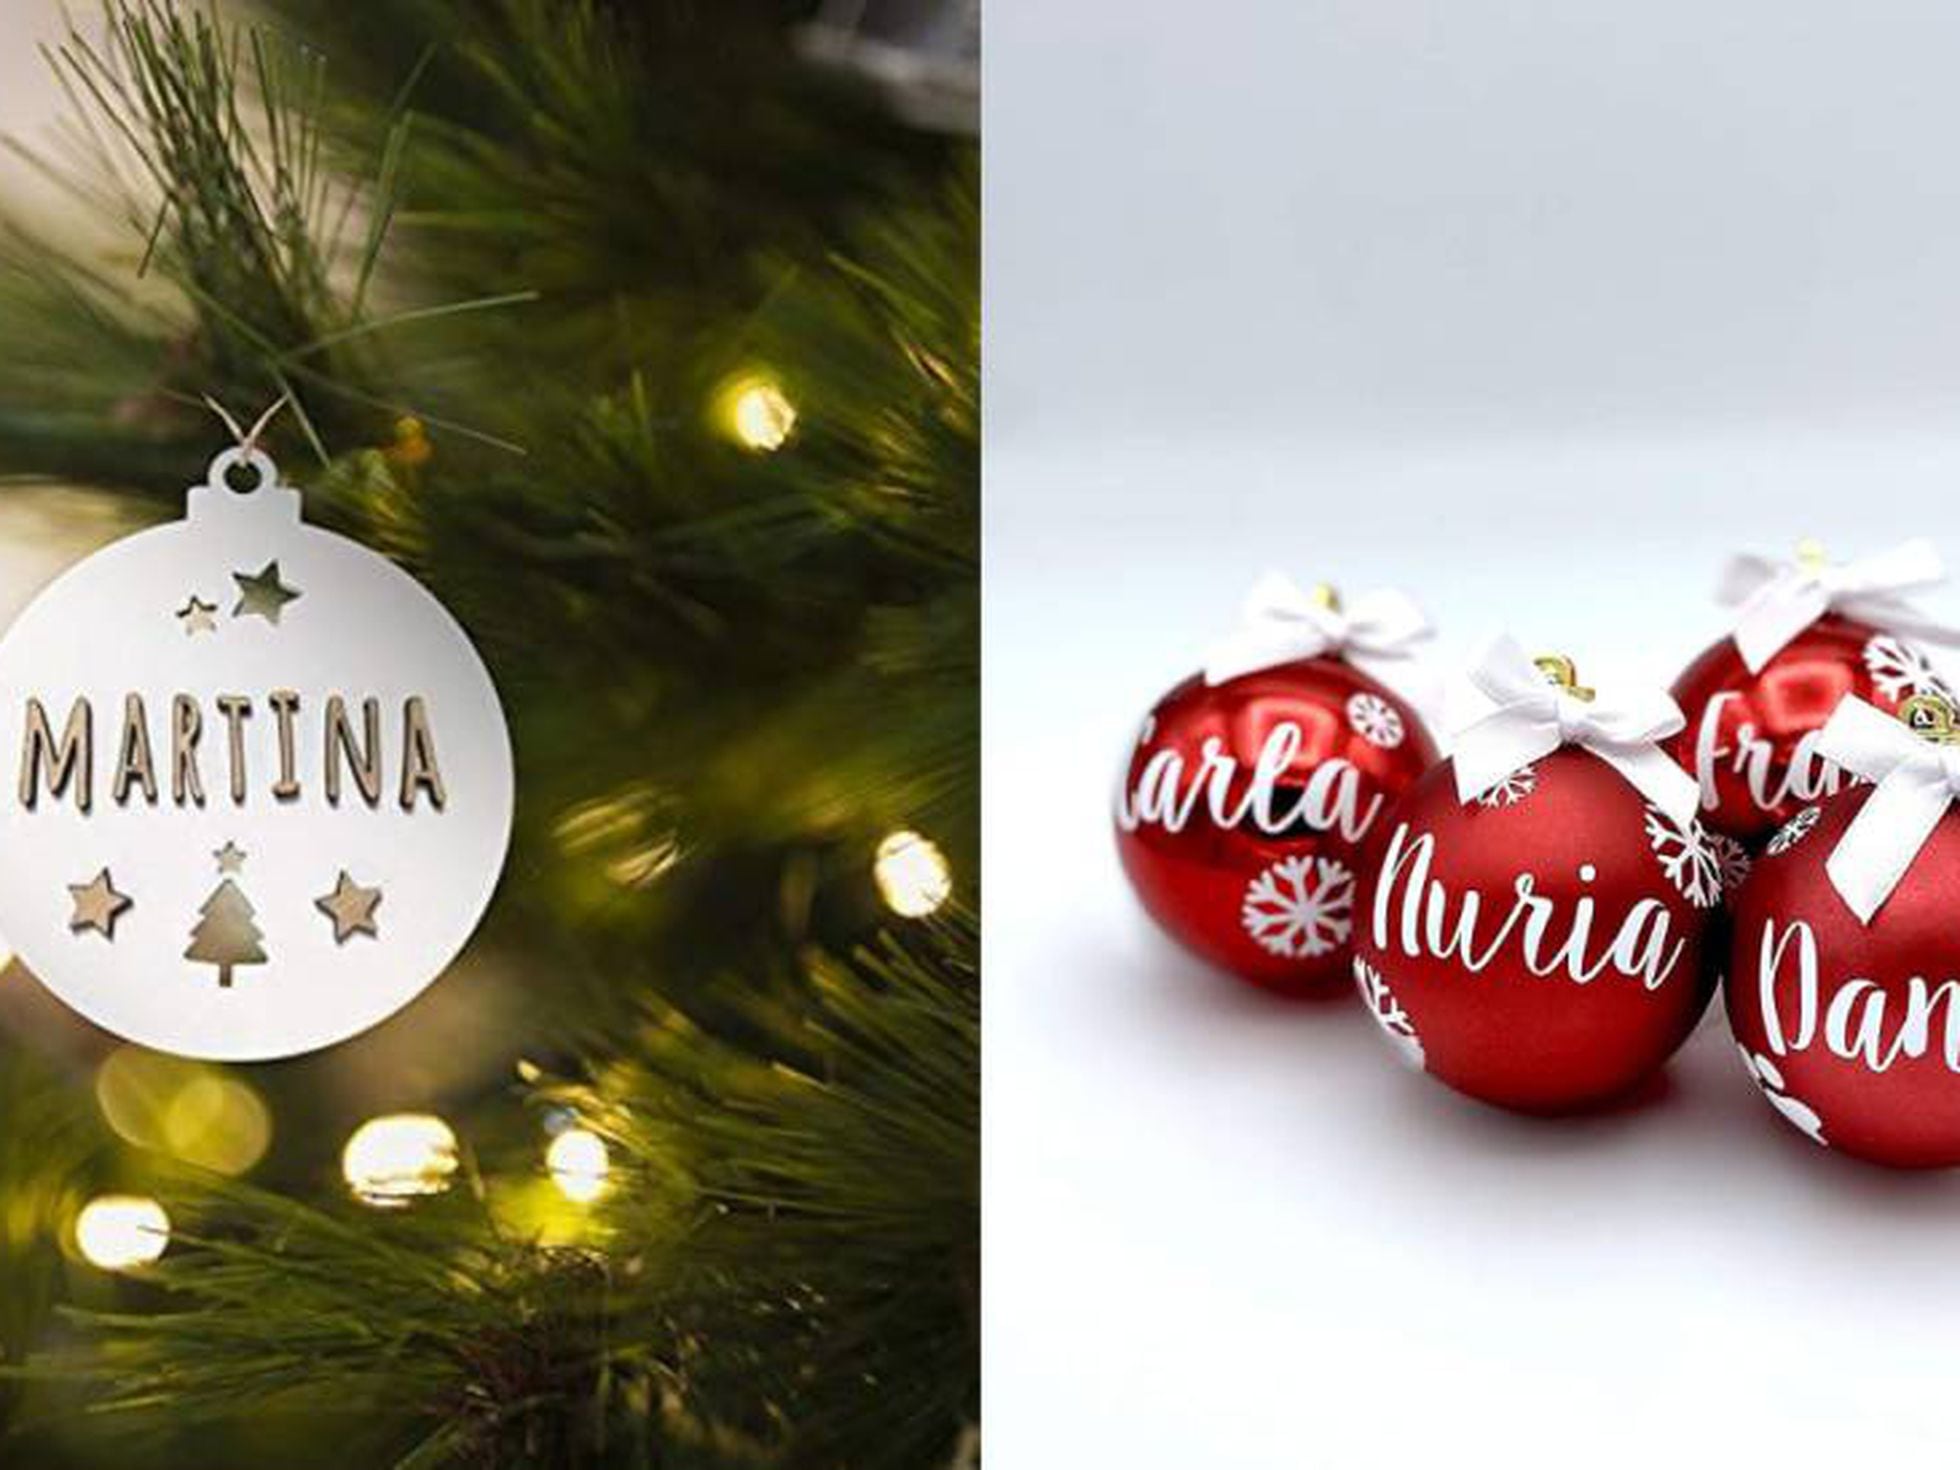 Bolas navideñas personalizadas para decorar tu hogar